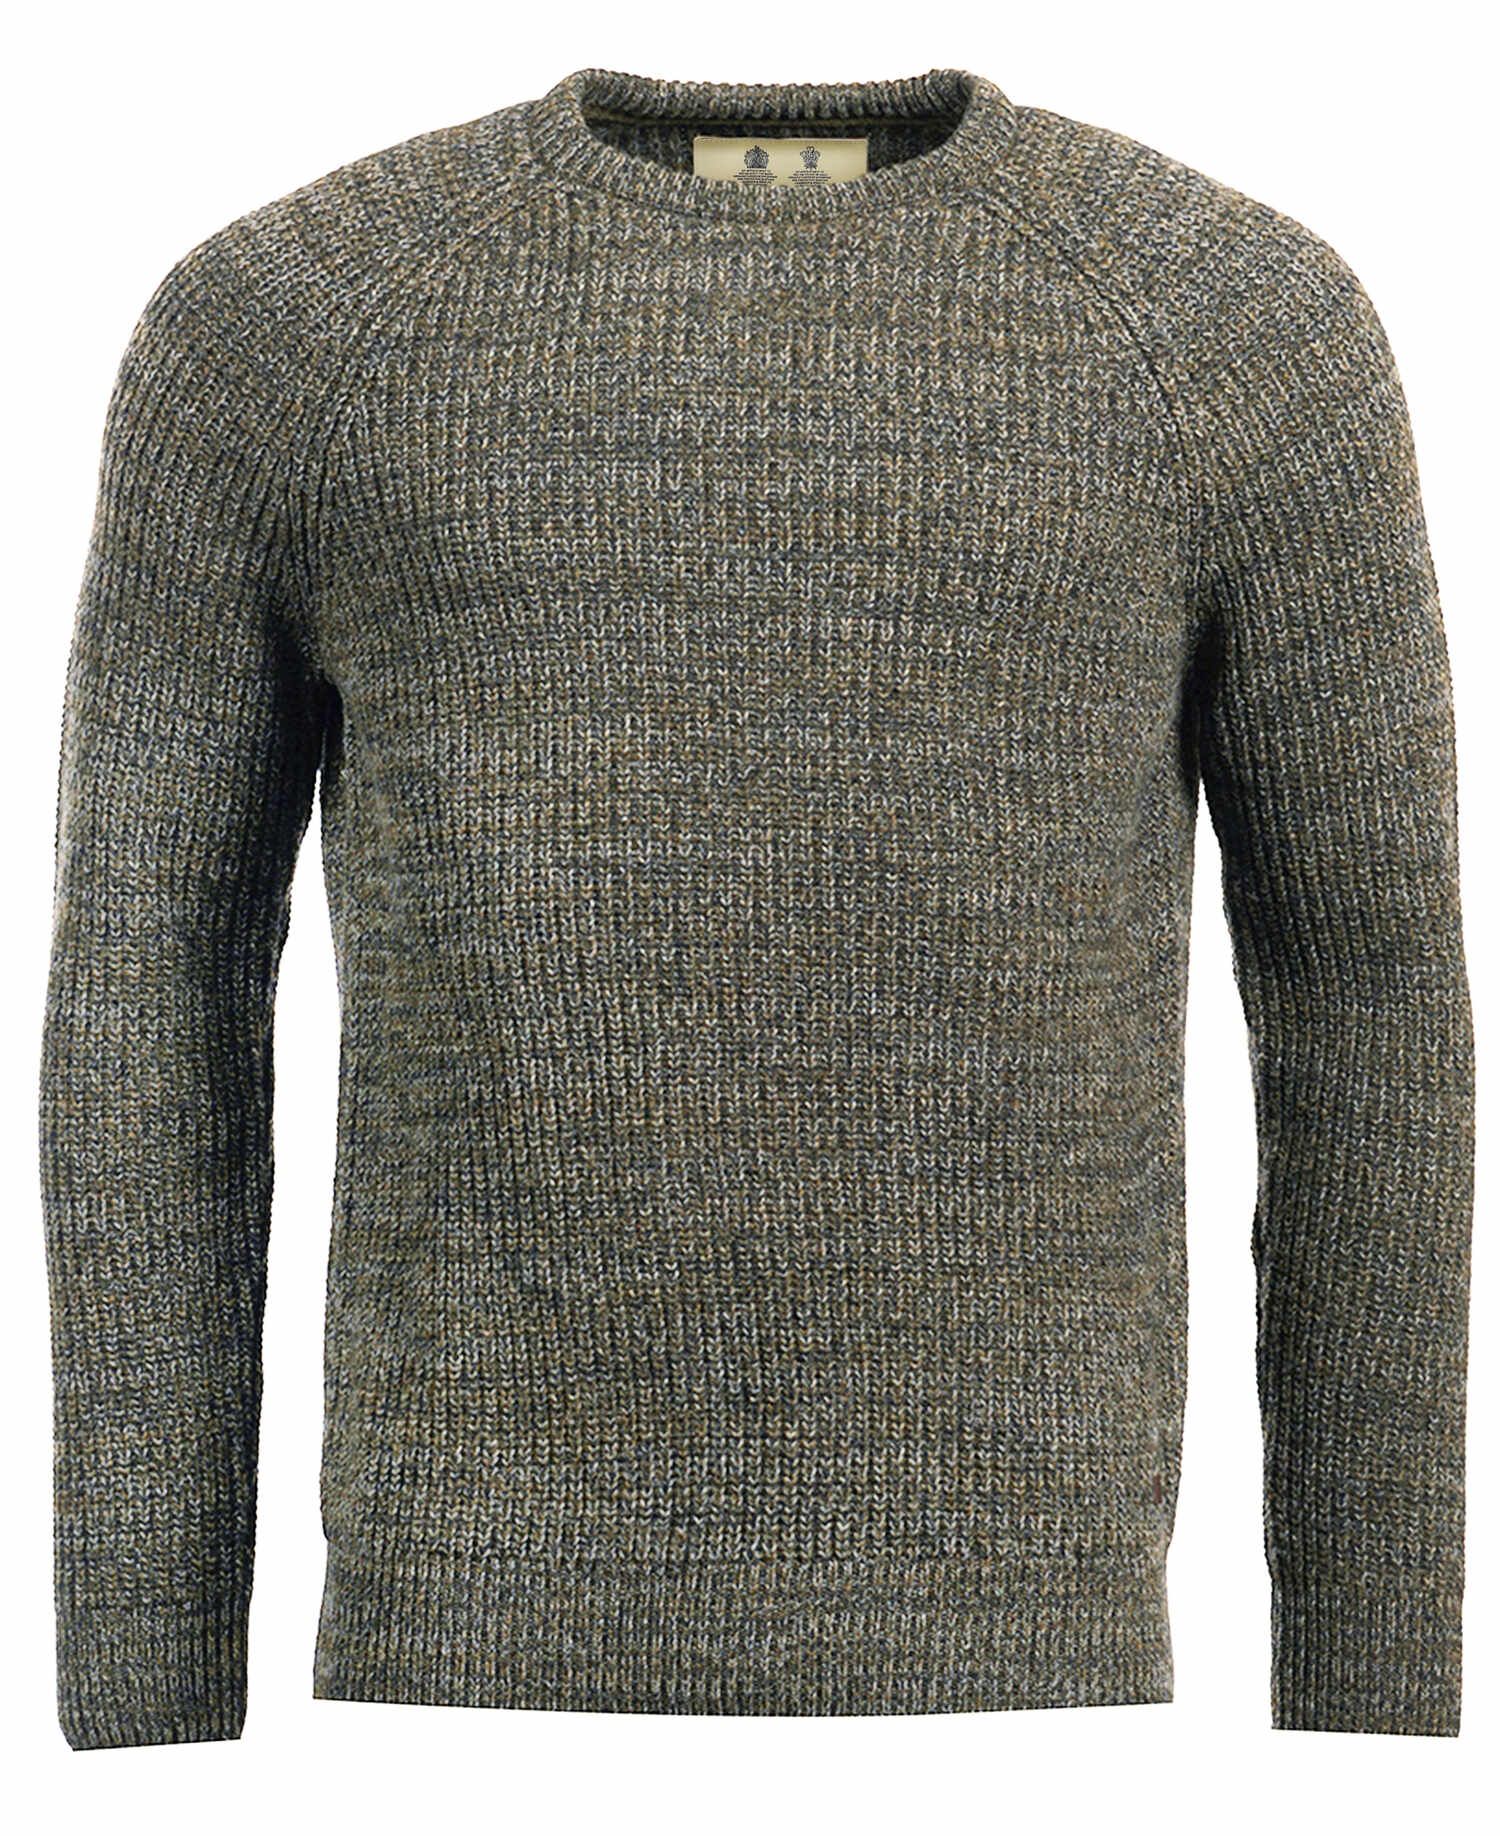 Men's Horseford Crew Neck Sweater - Olive